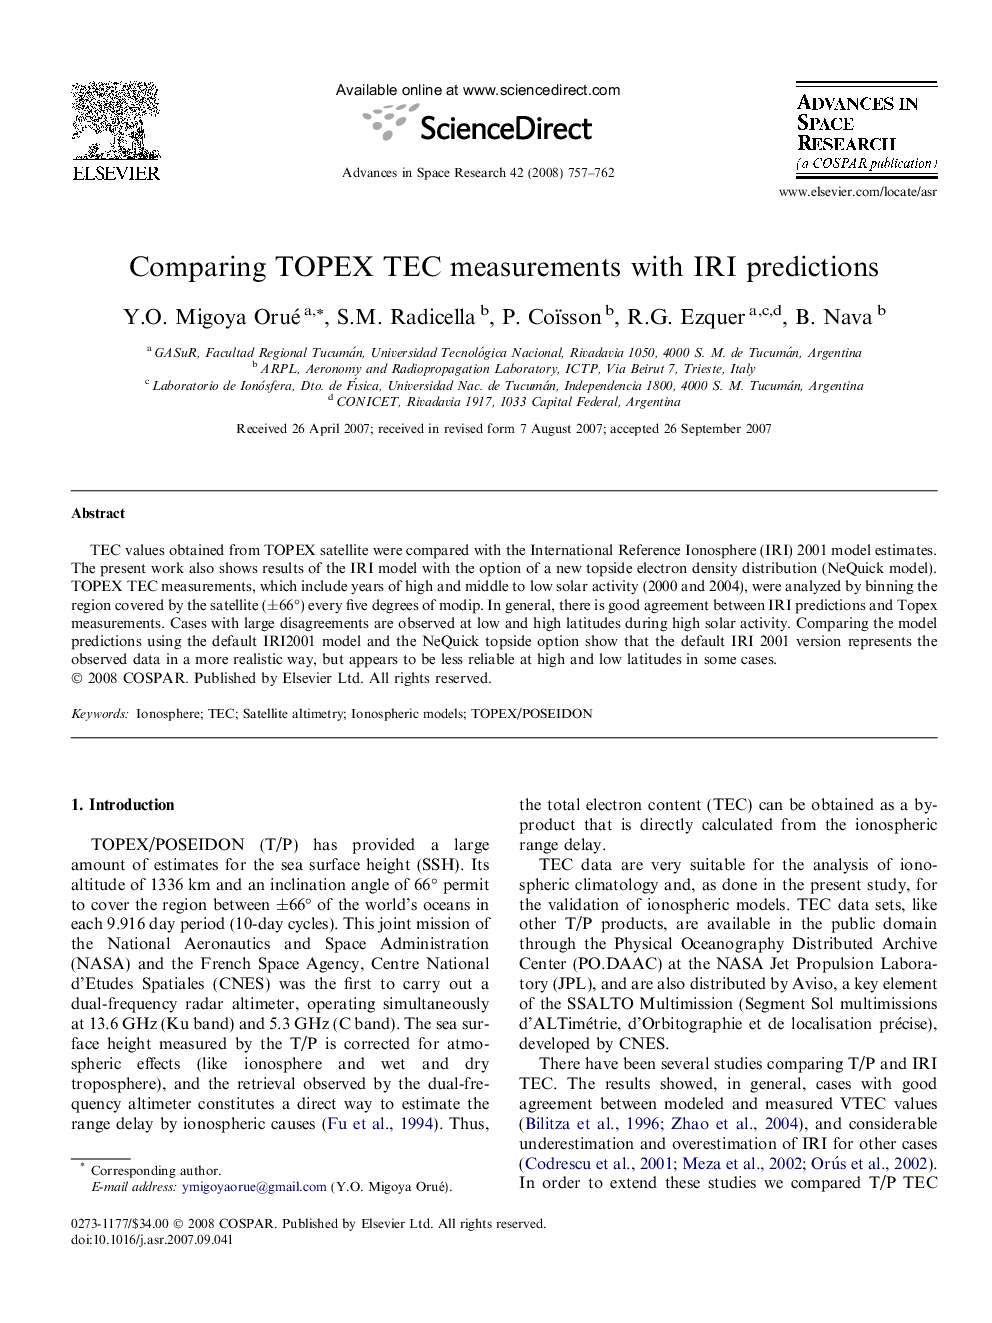 Comparing TOPEX TEC measurements with IRI predictions